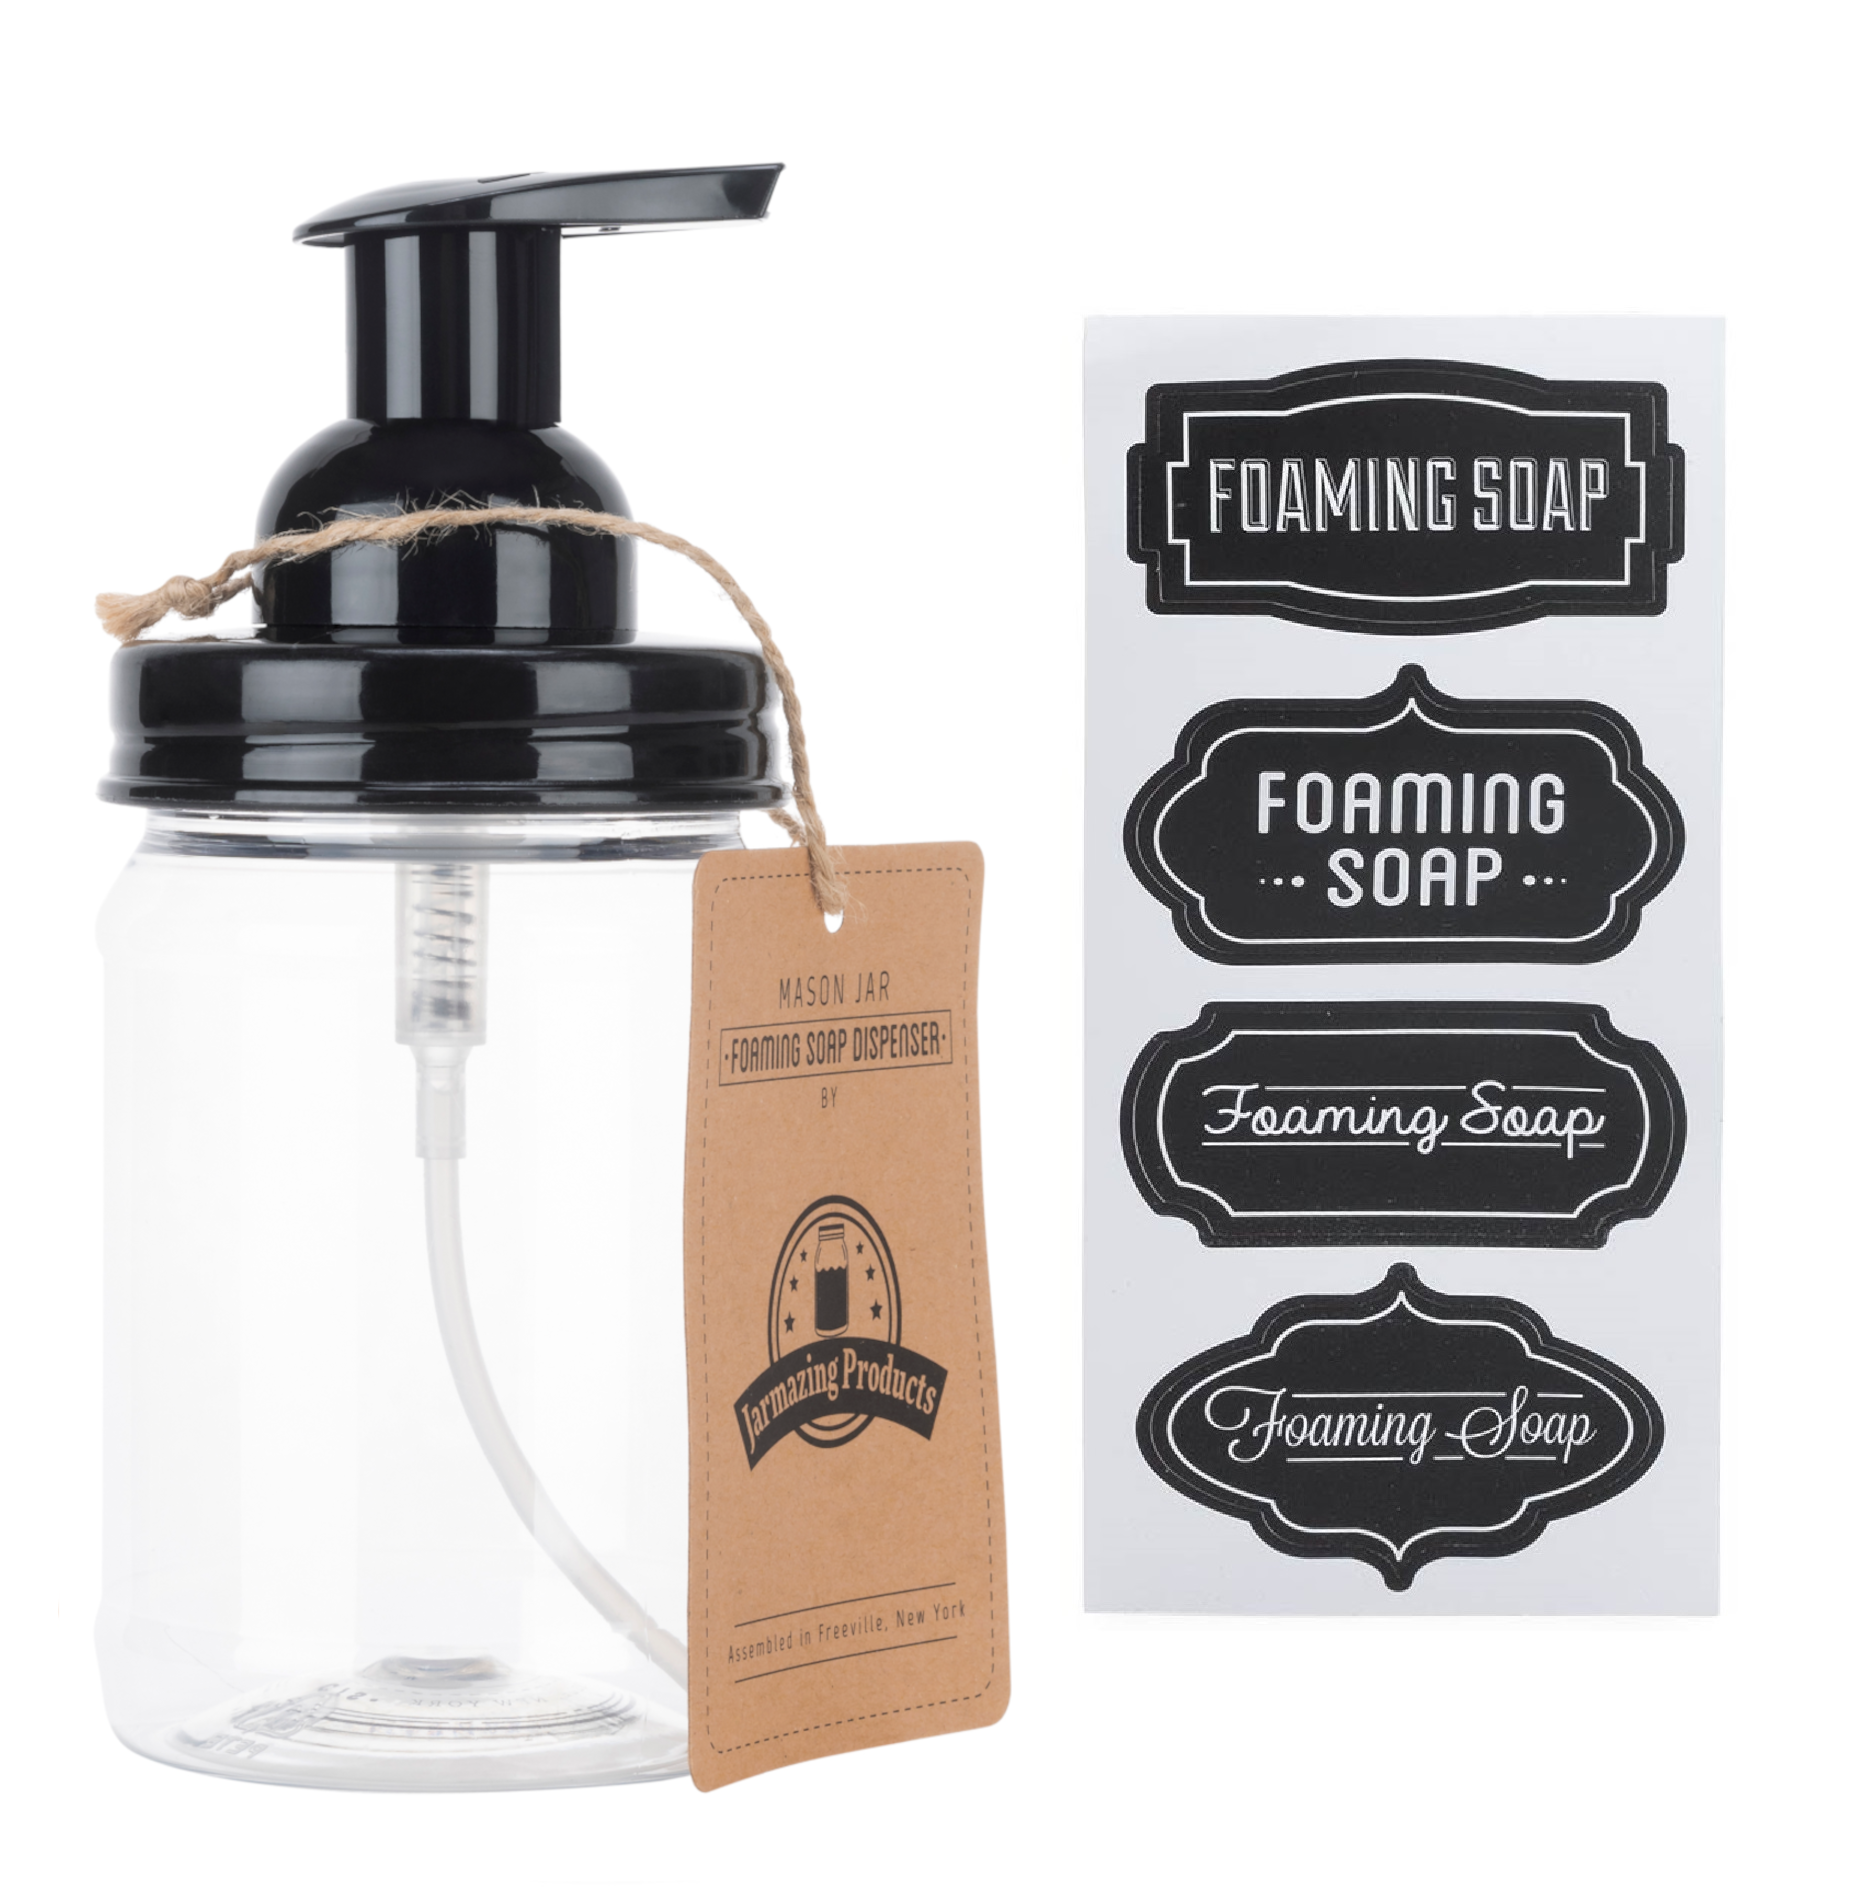 Jarmazing Products Mason Jar Foaming Soap Dispenser Black With 16 Ounce Ball Mason Jar One Pack! 